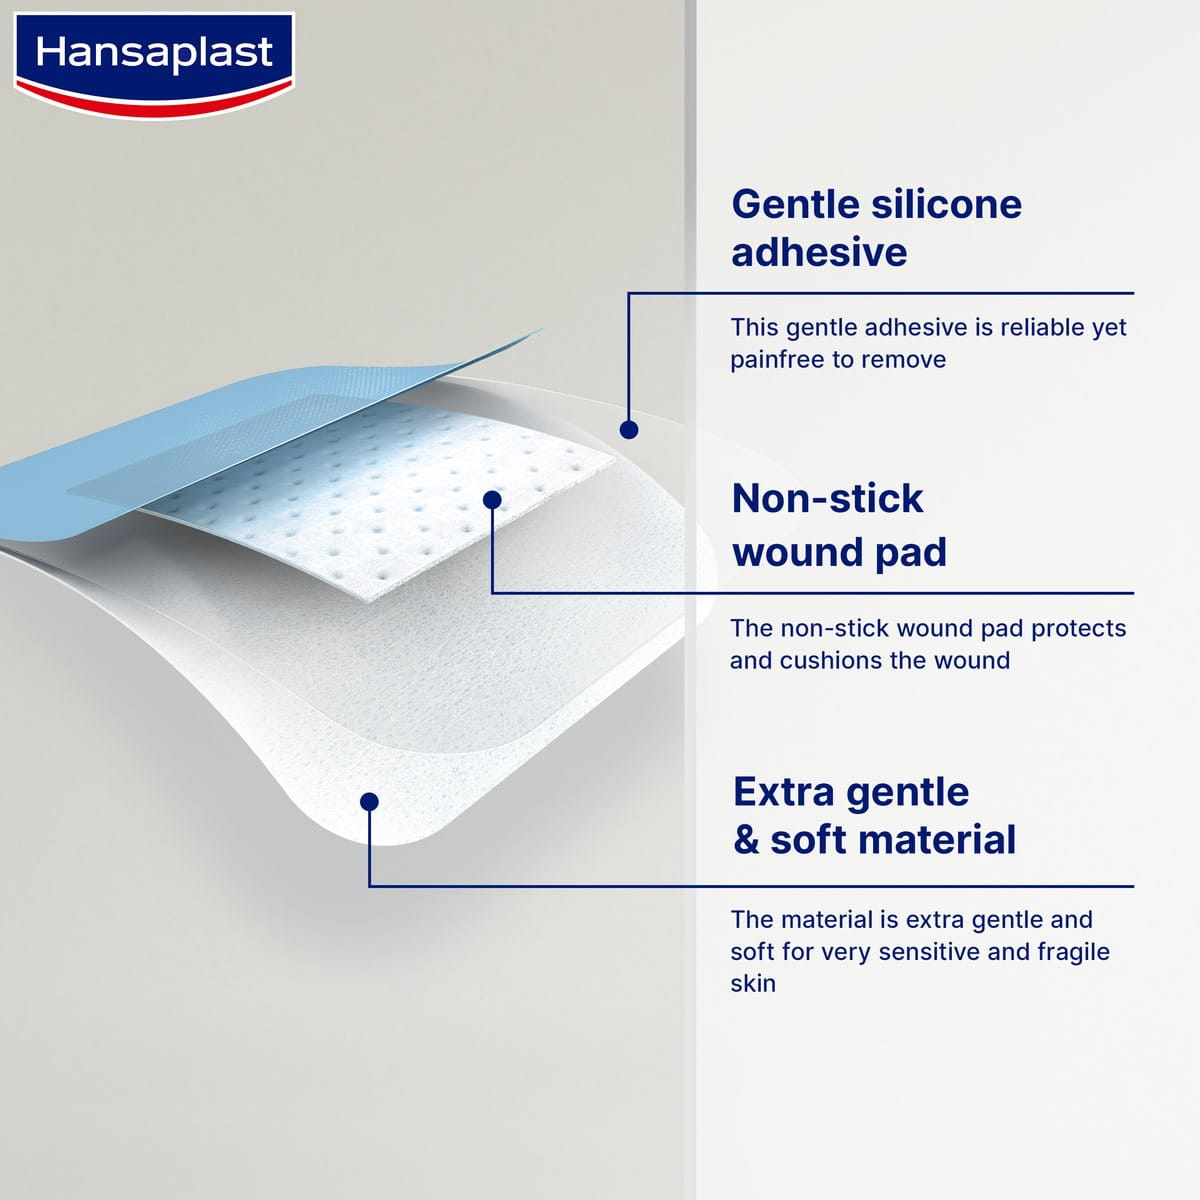 Hansaplast Ultra Sensitive Plasters - Pain-free Removal for Sensitive Skin